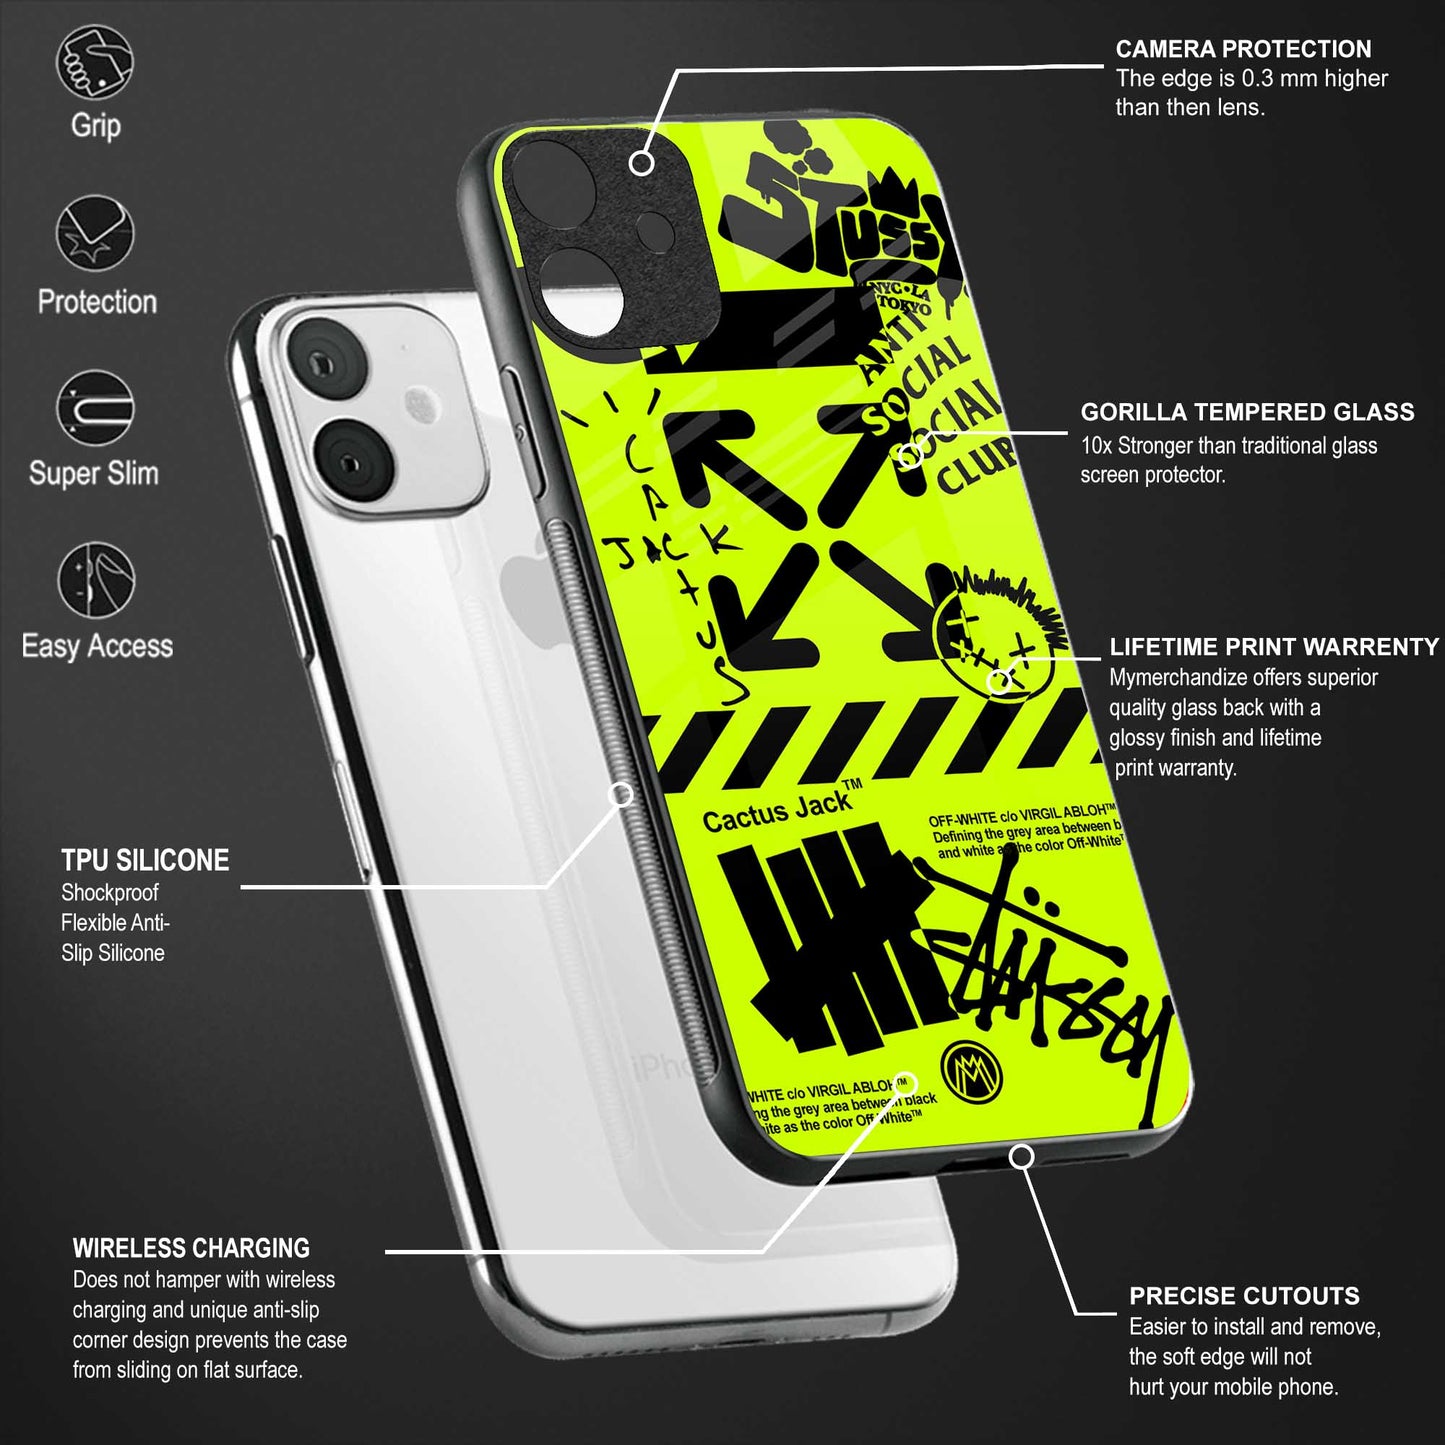 neon travis scott x anti social social club glass case for iphone 8 plus image-4